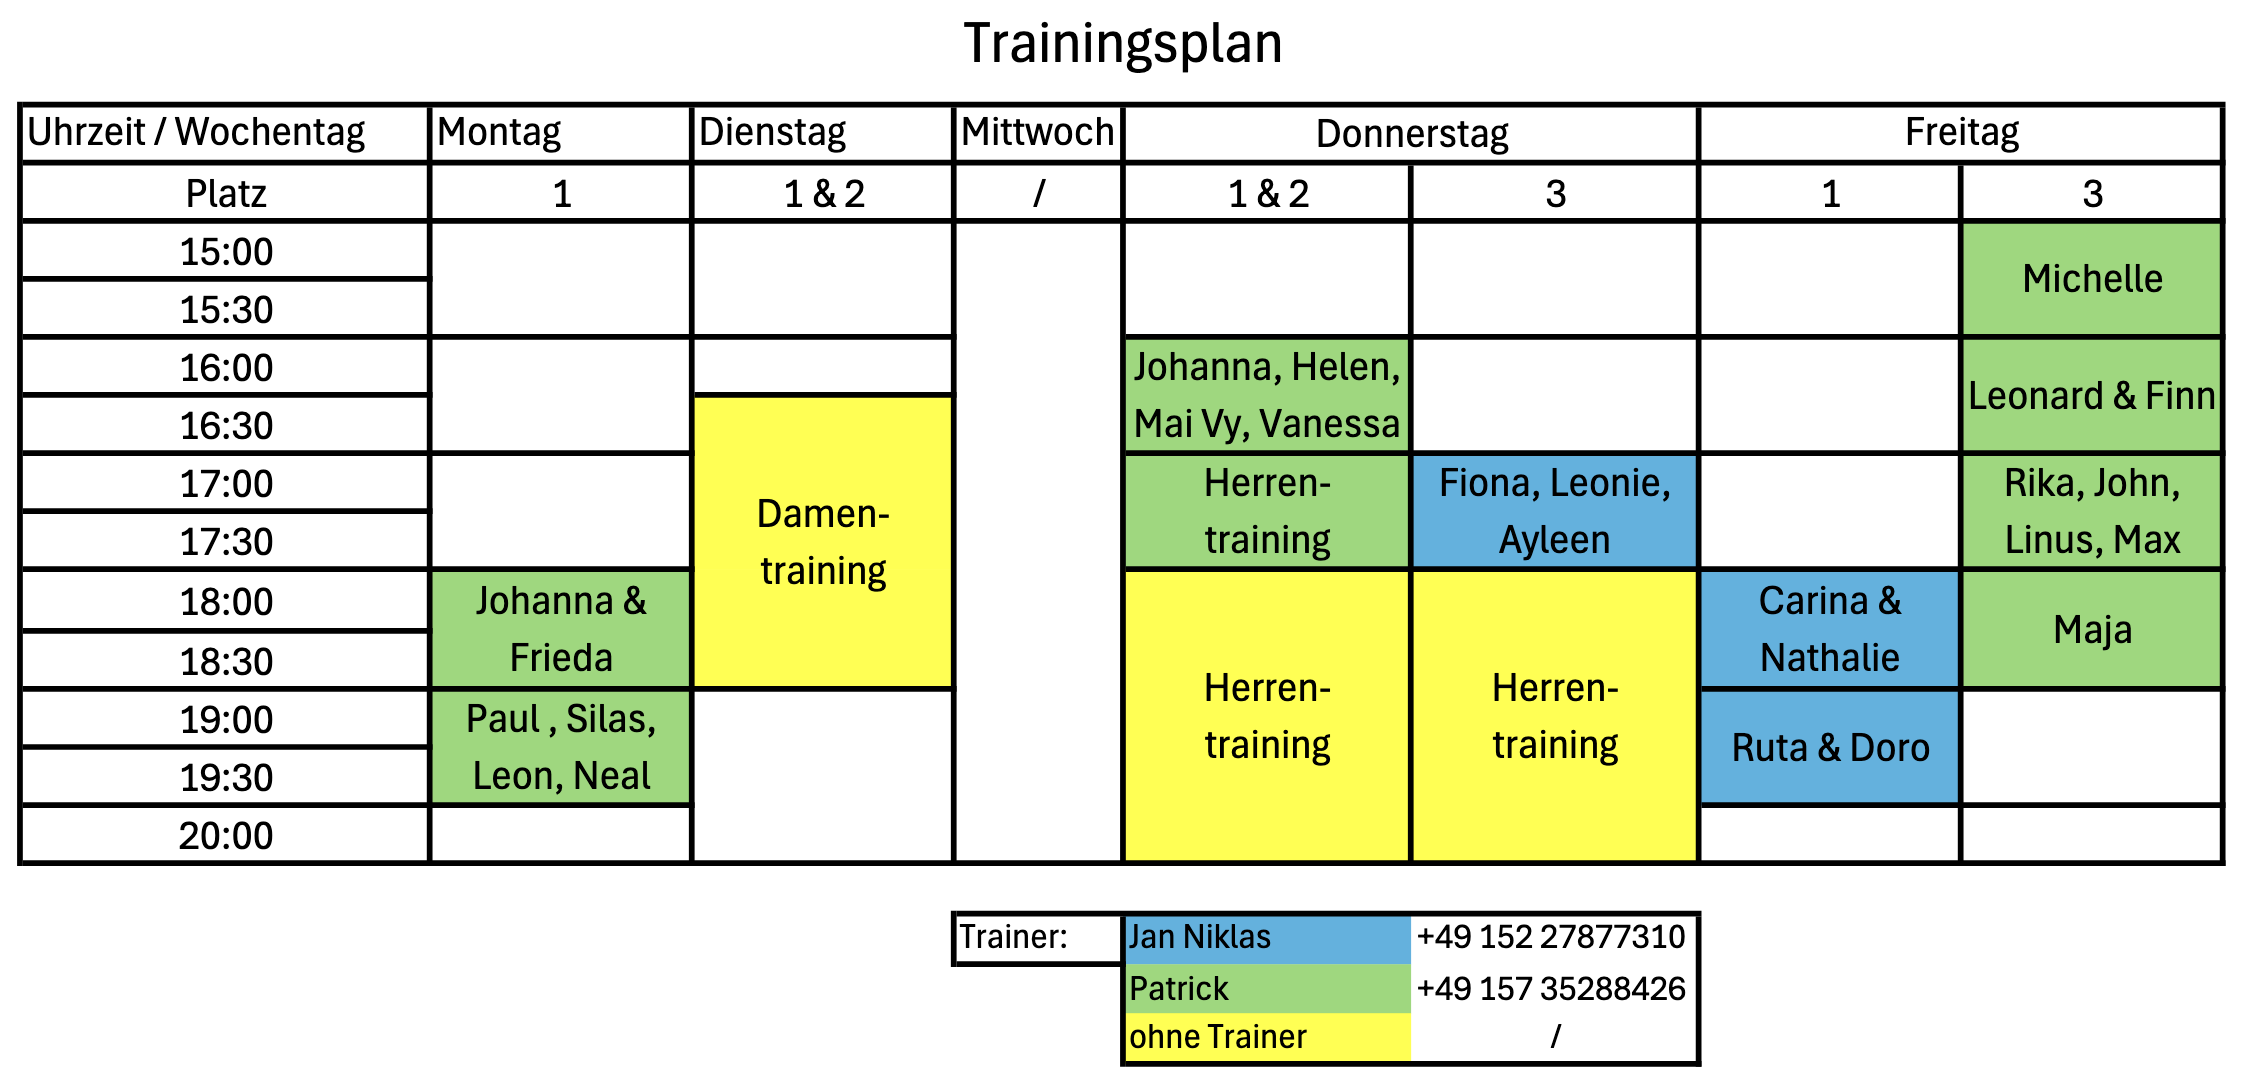 Trainingsplan Belegungsplan